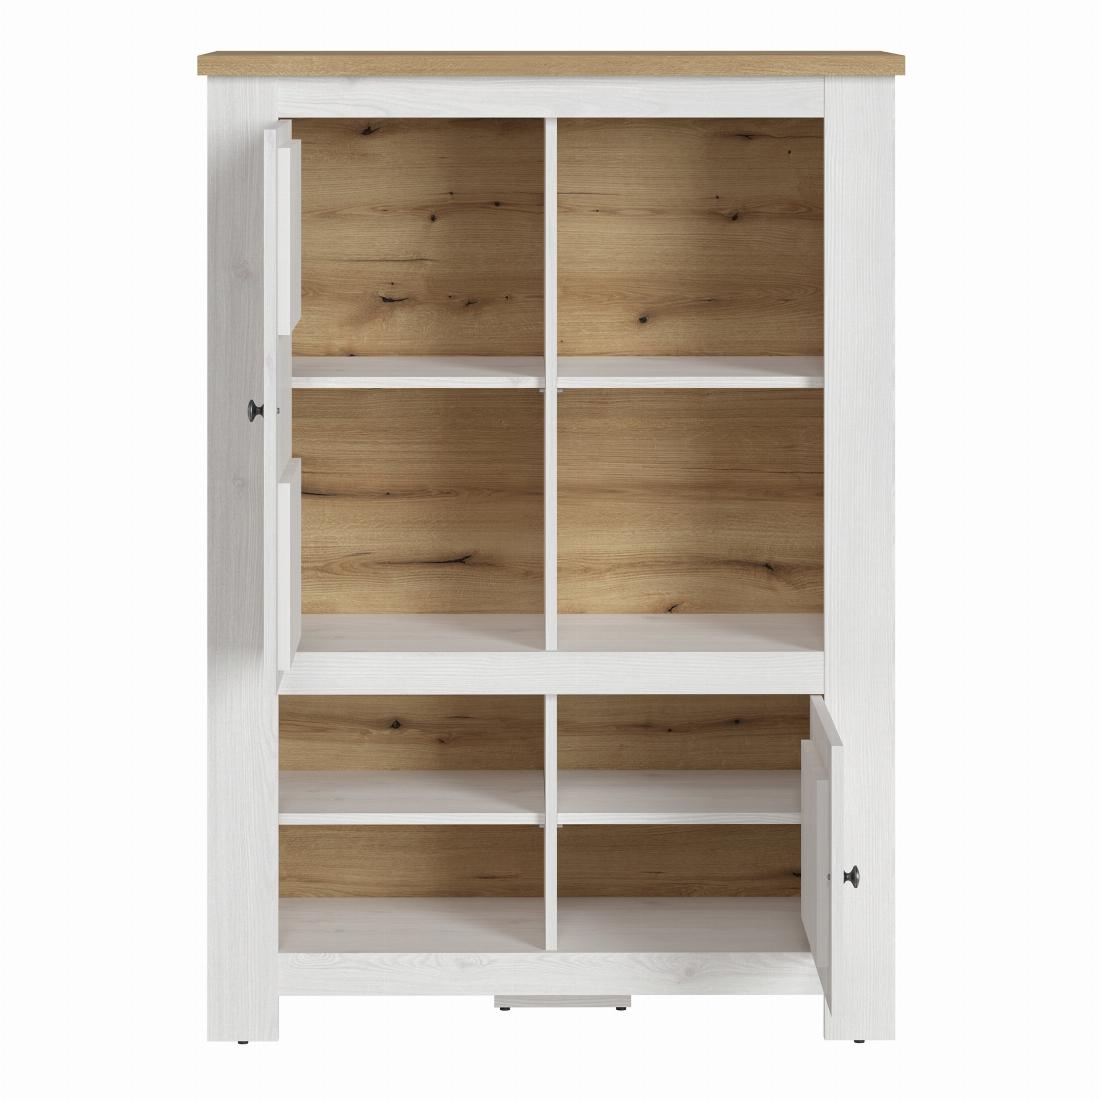 Celesto 2 door 4 shelves cabinet in White and Oak